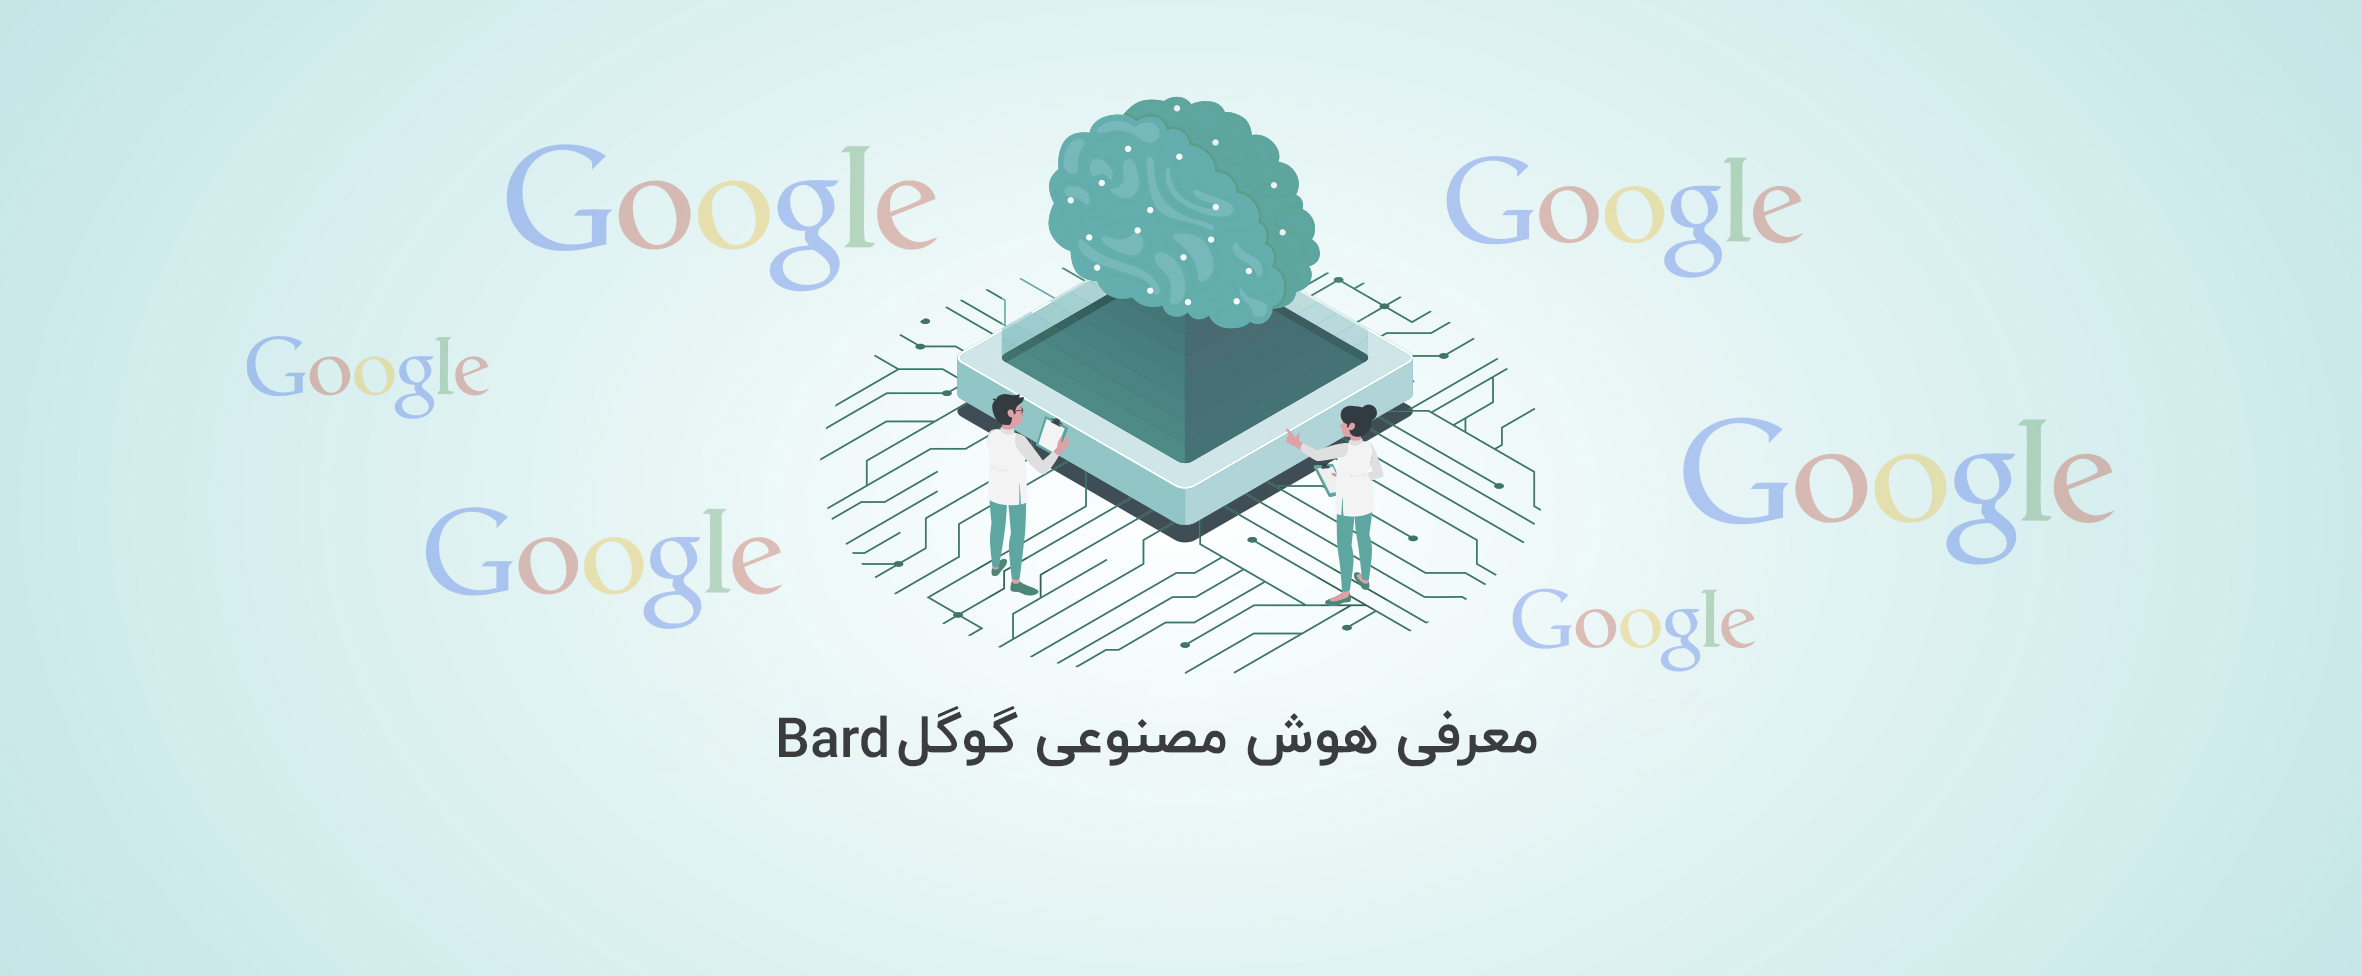 Google Bard | معرفی جامع هوش مصنوعی گوگل بارد [2023]- آذرسیس